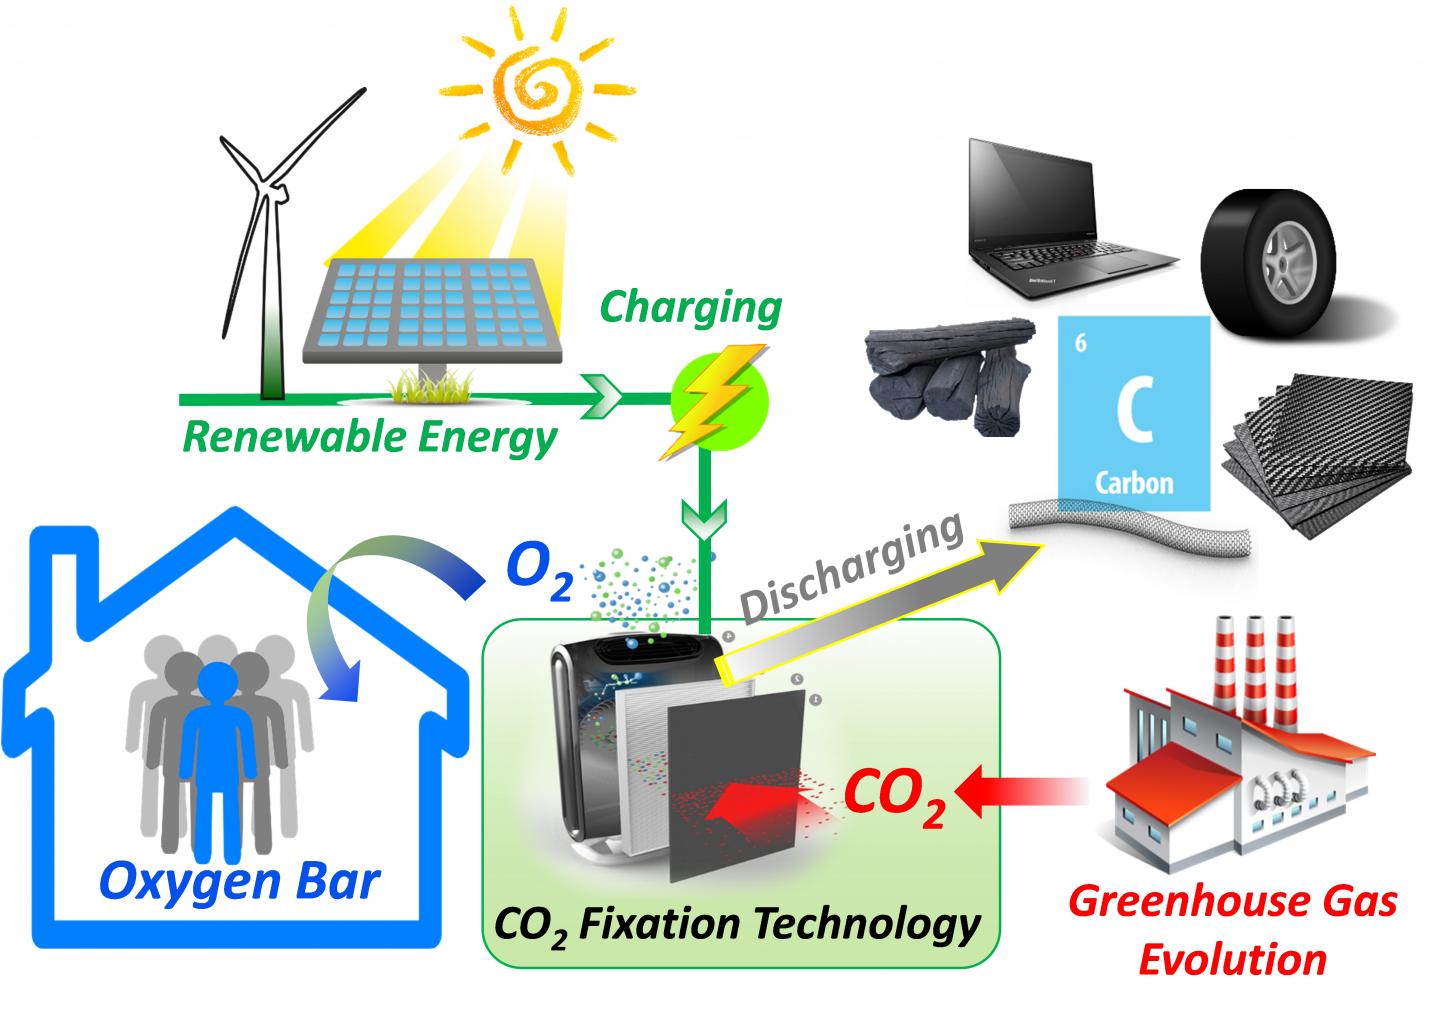 Li-CO2 Technology Carbon Fixation